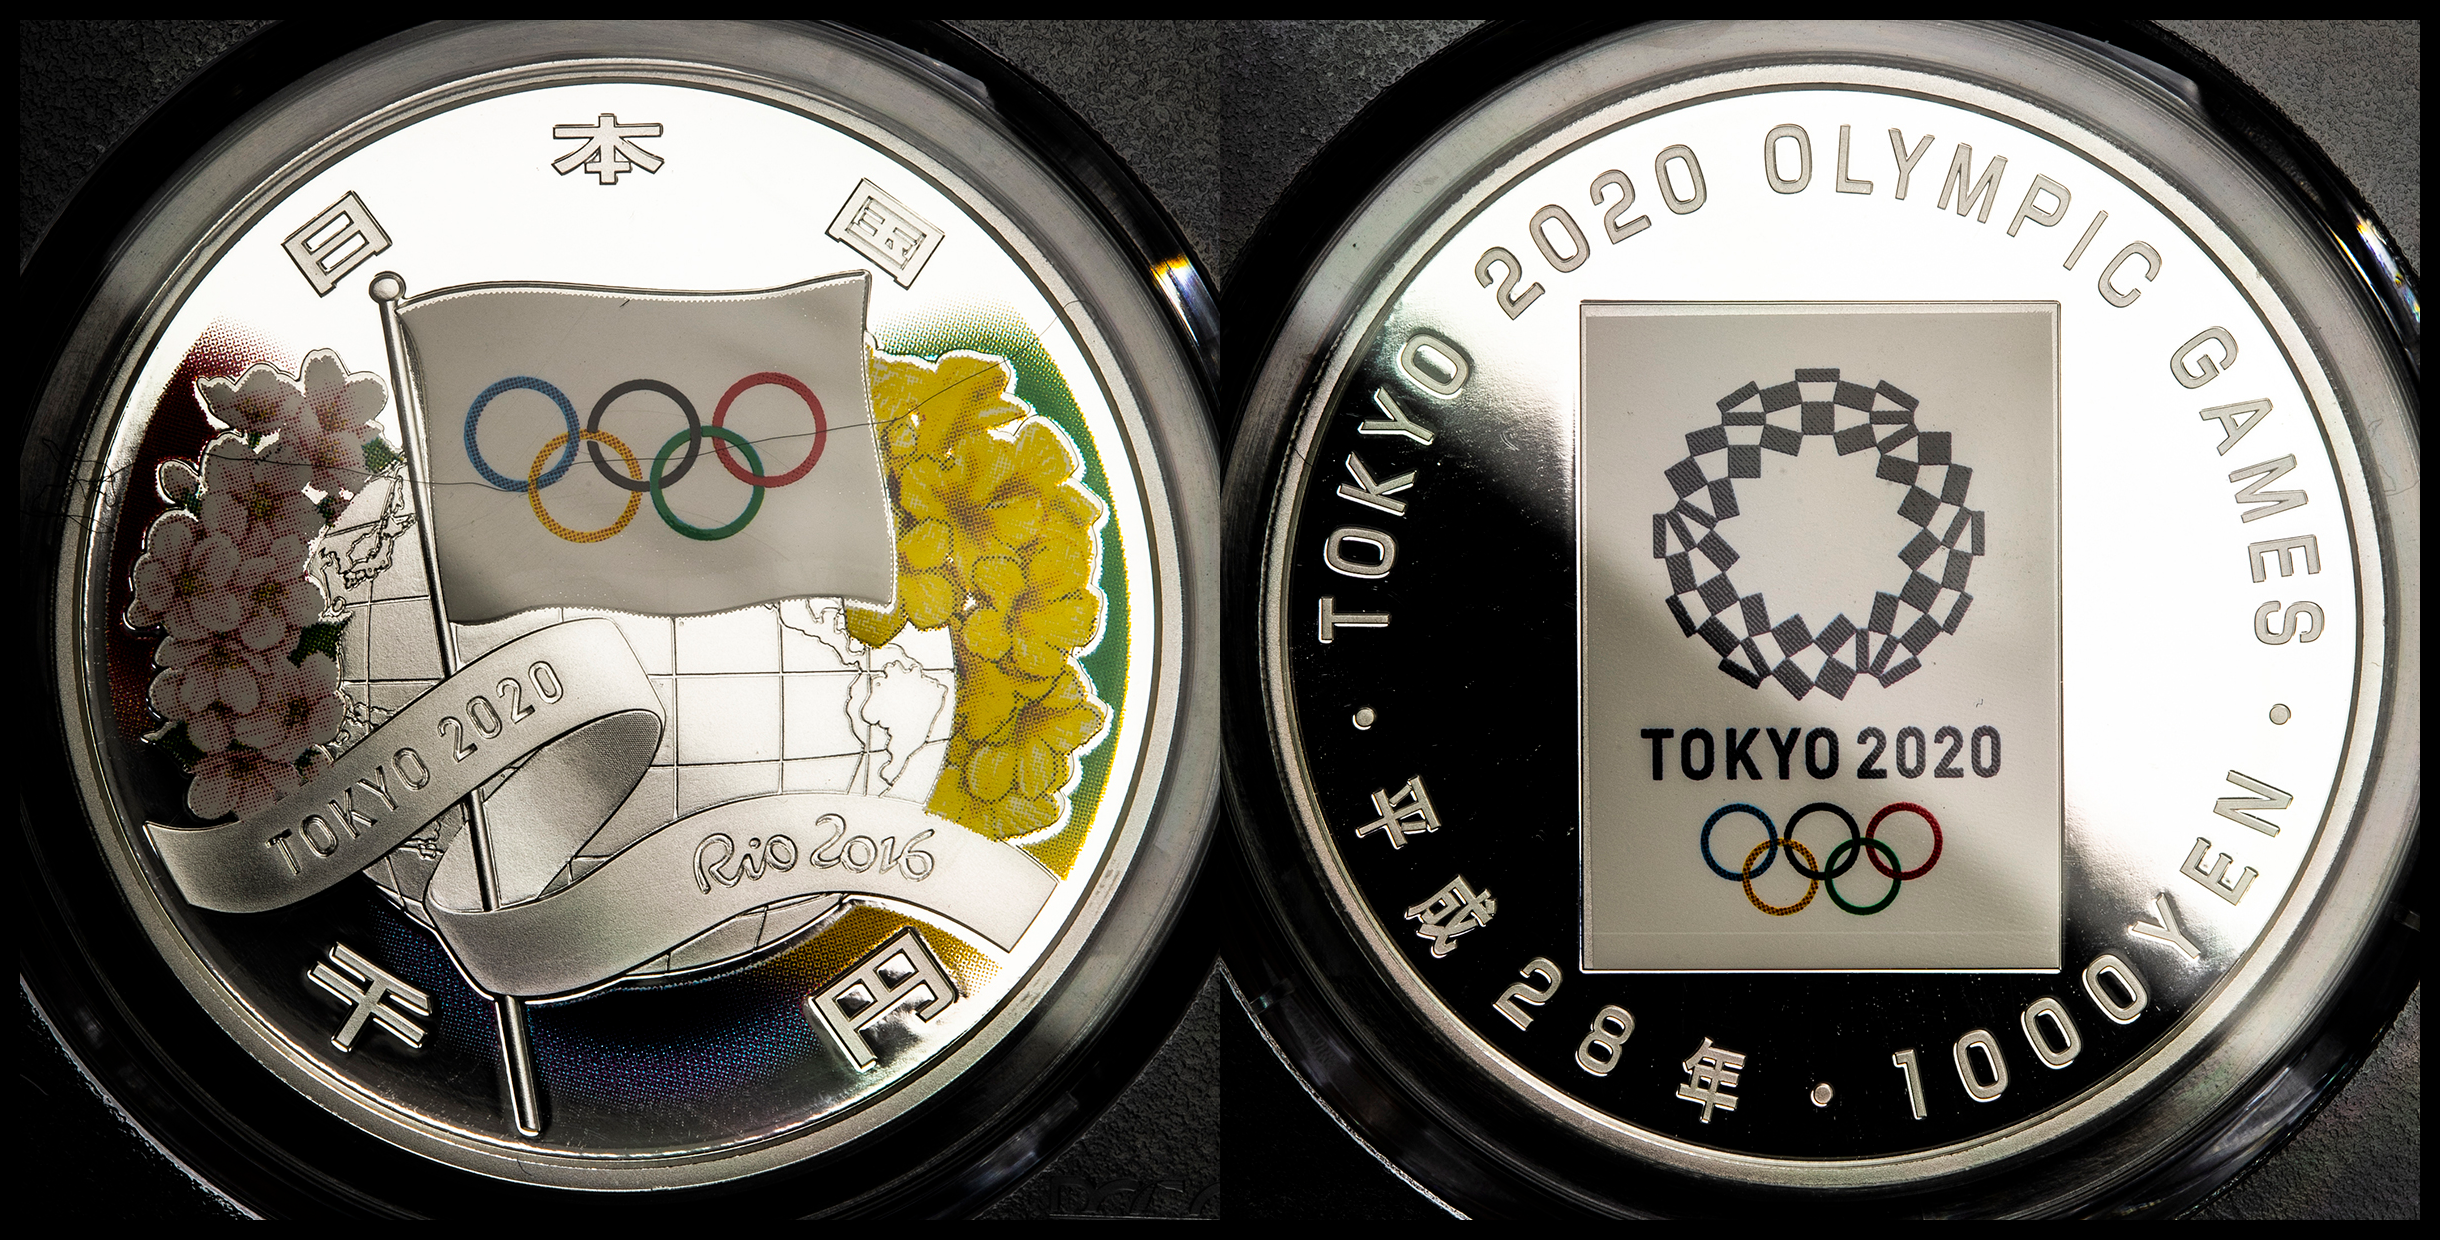 貨幣博物館 | 日本 東京2020年オリンピック競技大会記念千円銀貨 Tokyo